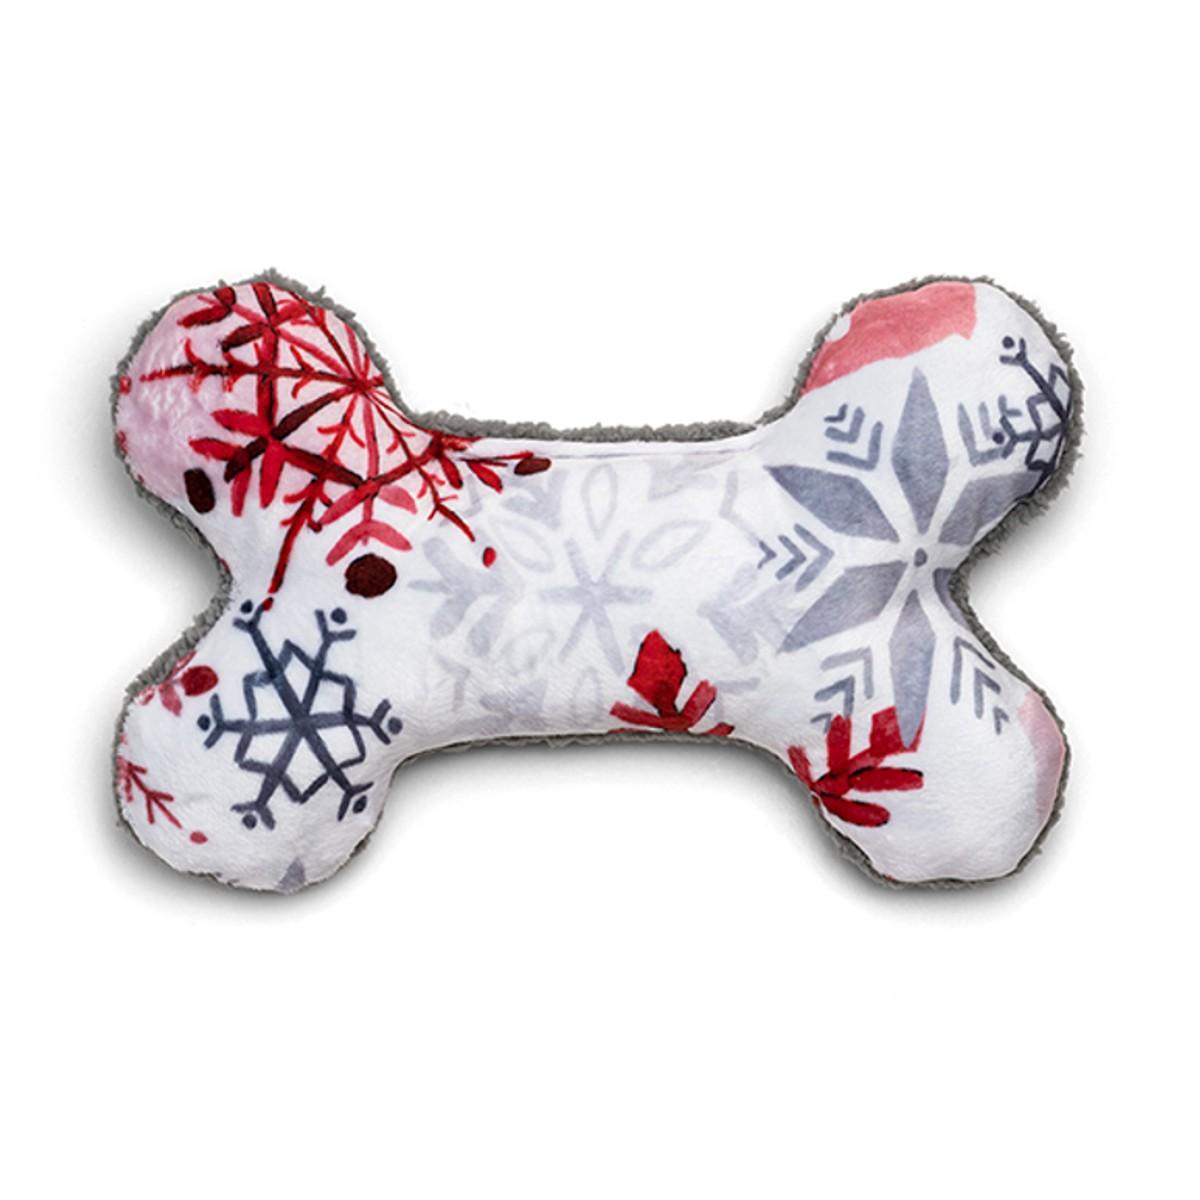 West Paw Holiday Merry Bone Dog Toy - Snowflake